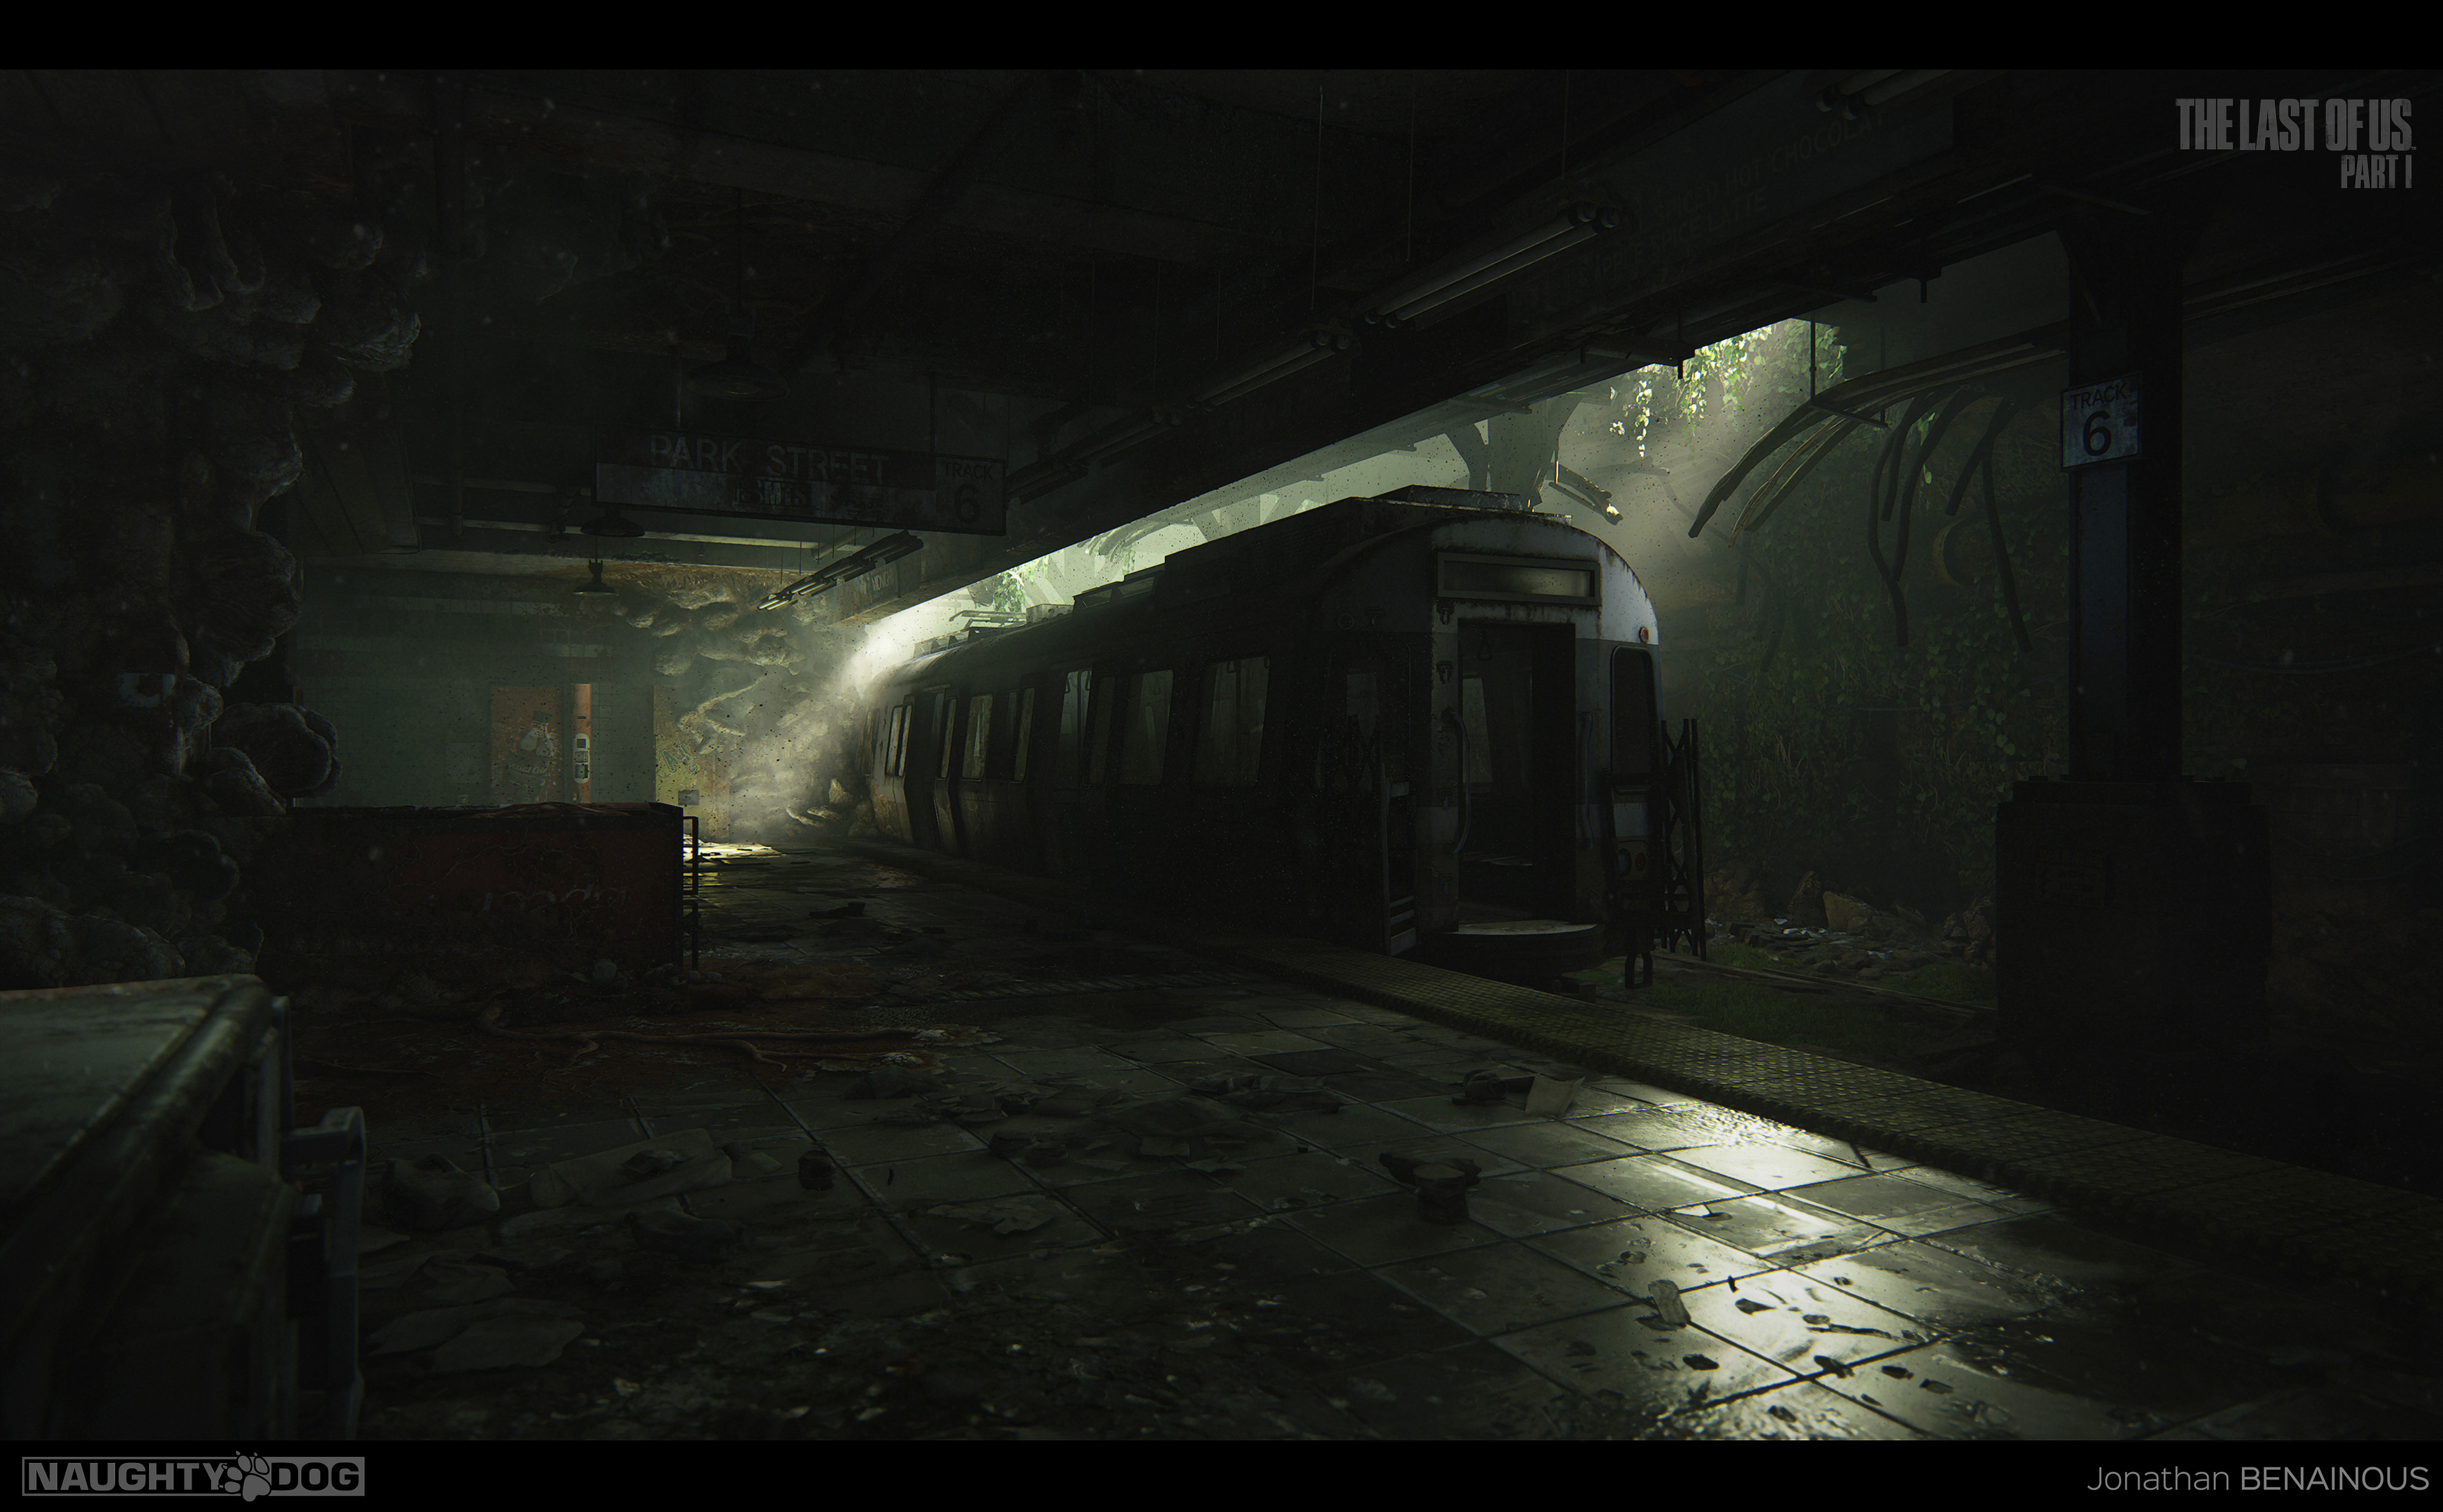 ArtStation - The Last of Us Part I - Subway Station [Part I] - by Jonathan  BENAINOUS